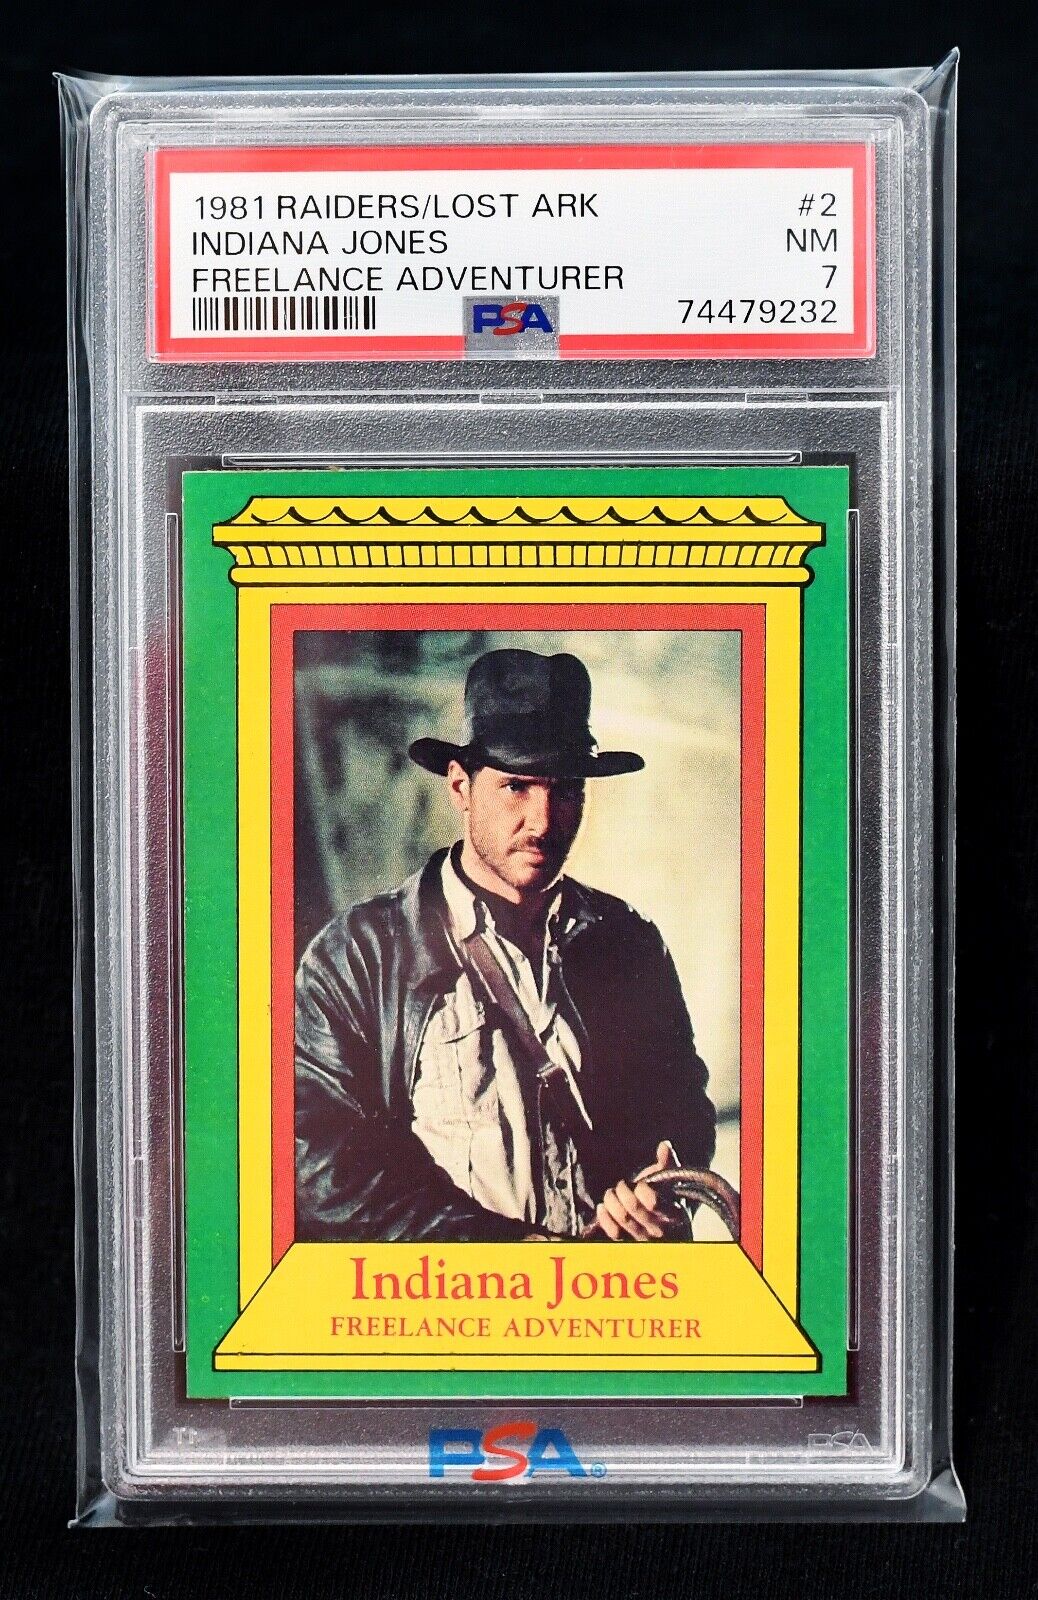 1981 Topps Raiders of the Lost Ark #2 Indiana Jones Freelance Adventurer - PSA 7